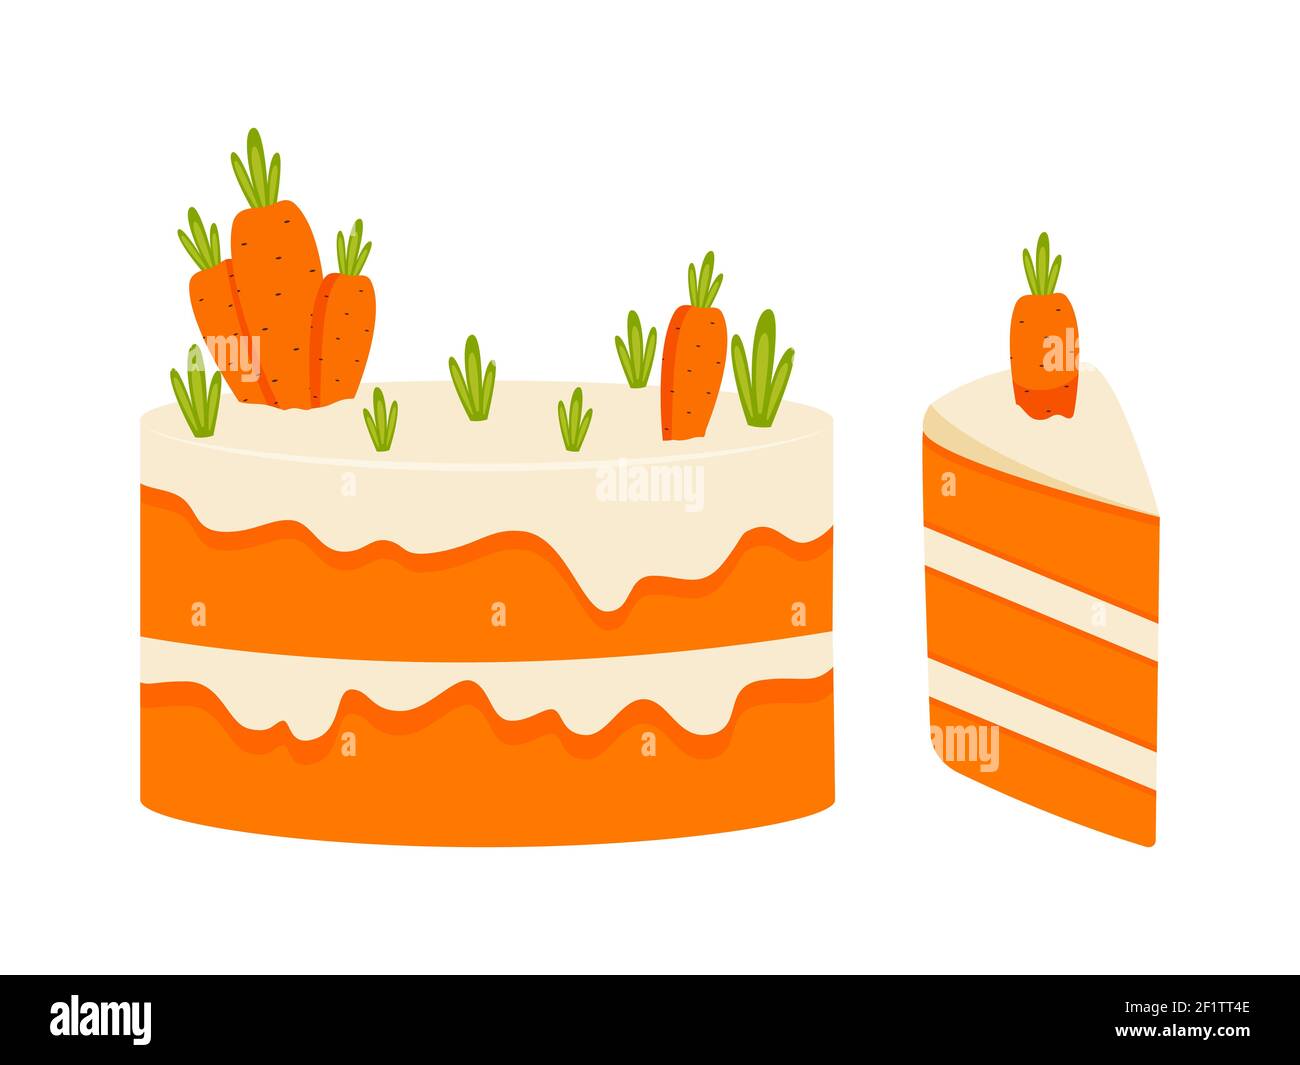 Carrot cake cartoon